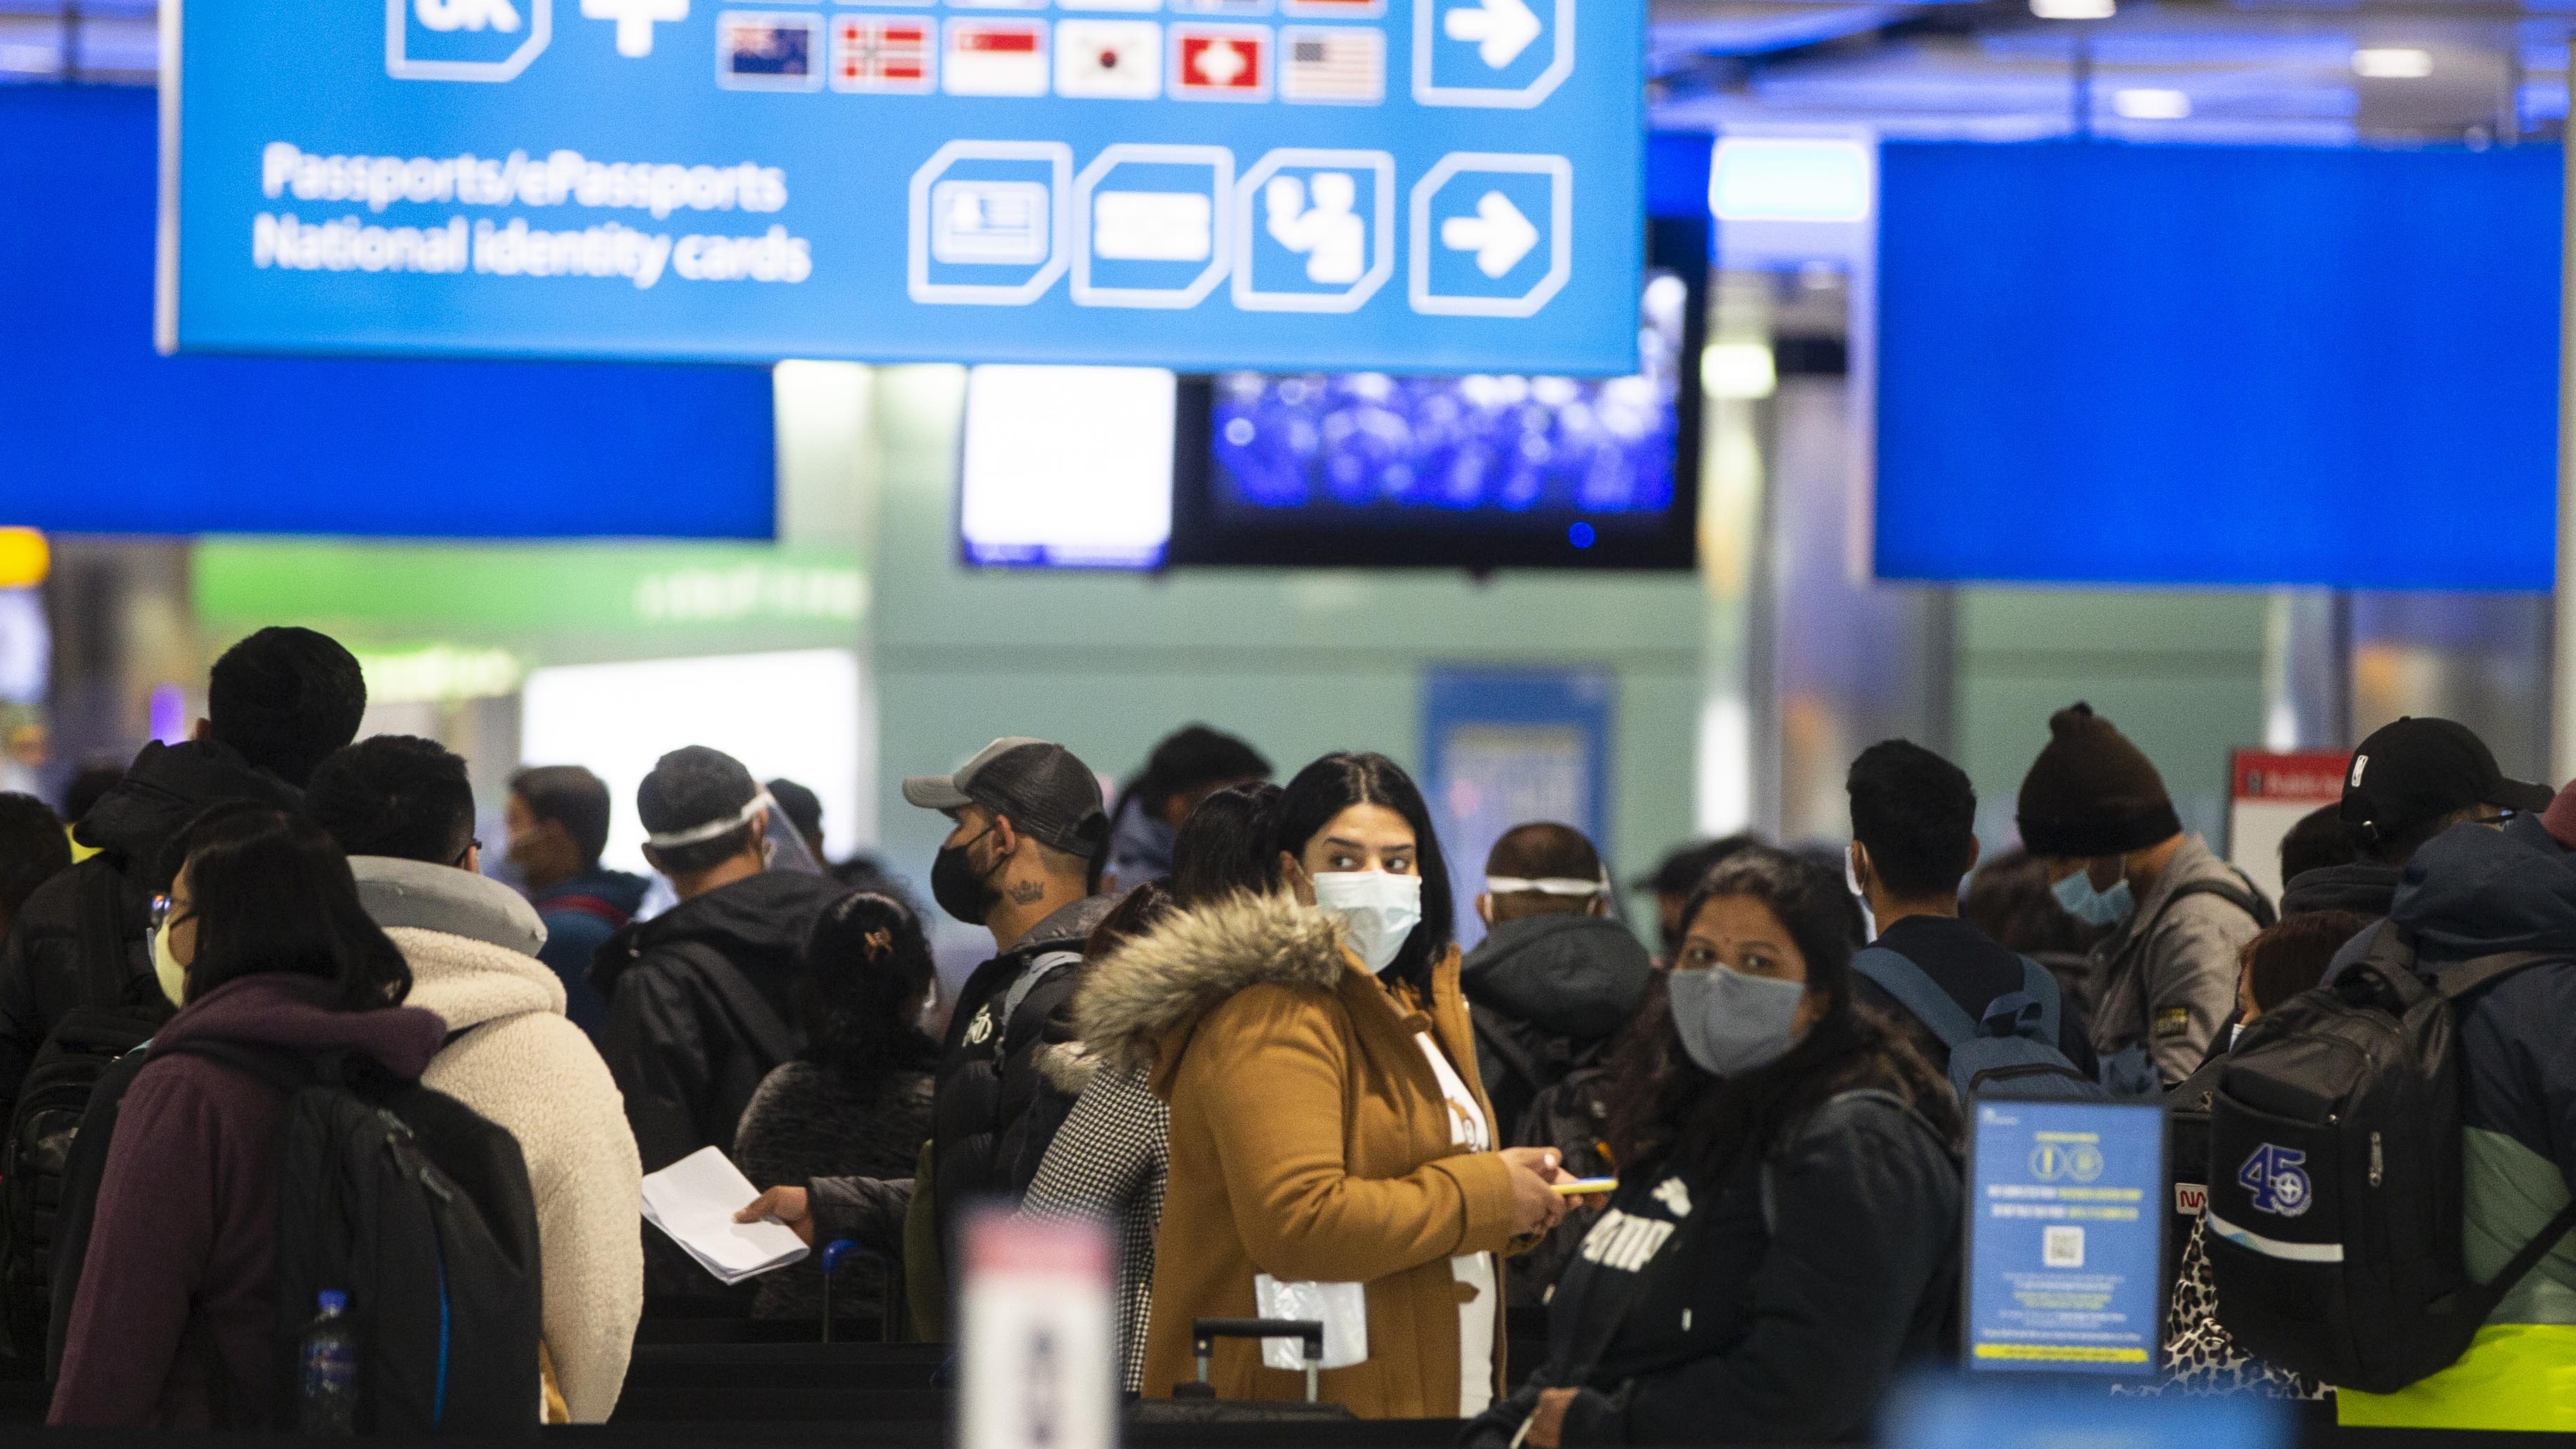 A queue at passport control in Heathrow Terminal Five